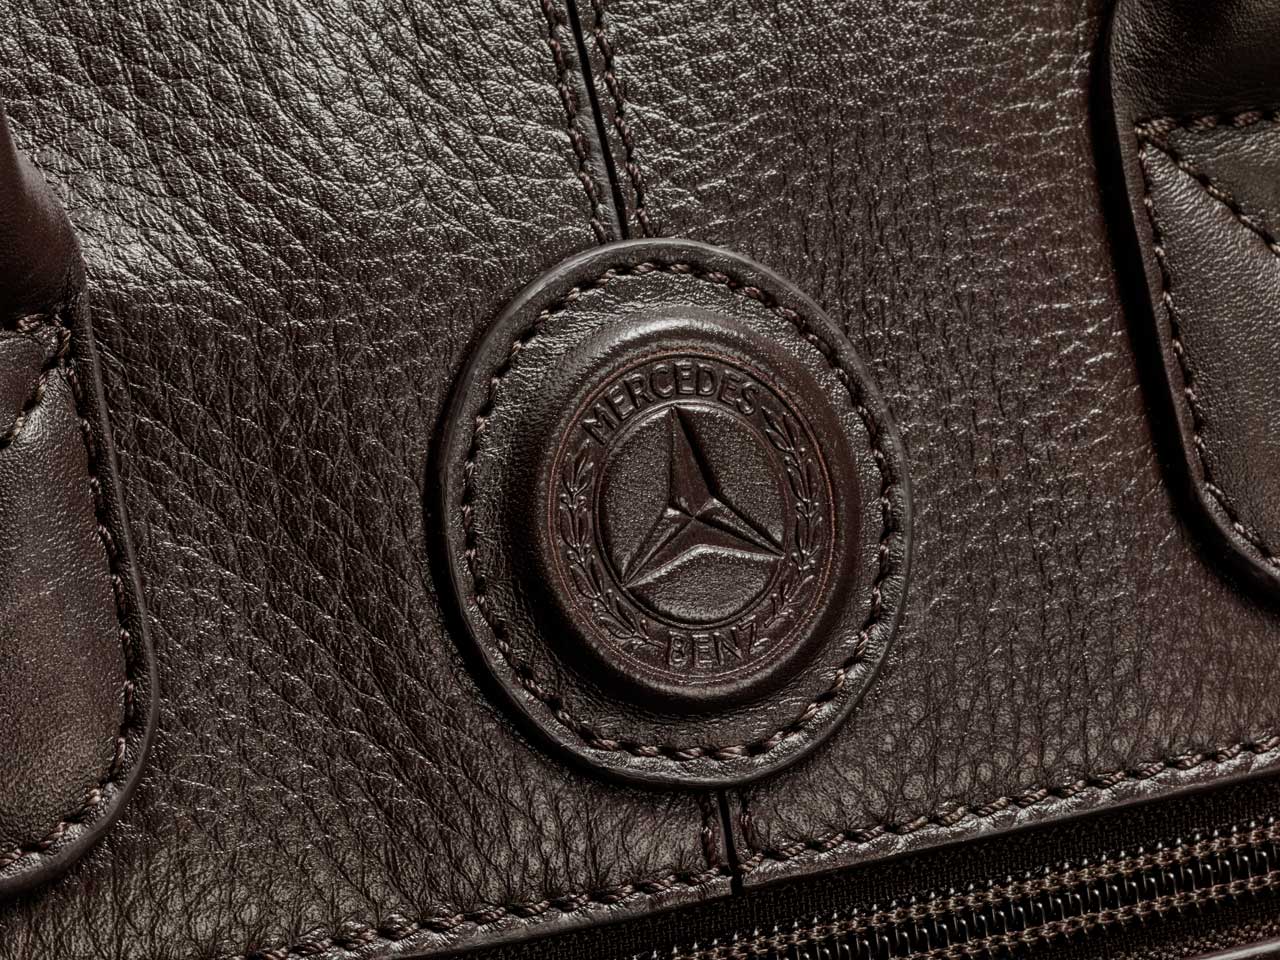 Mercedes-Benz Classic Leather Bag Black or Cognac